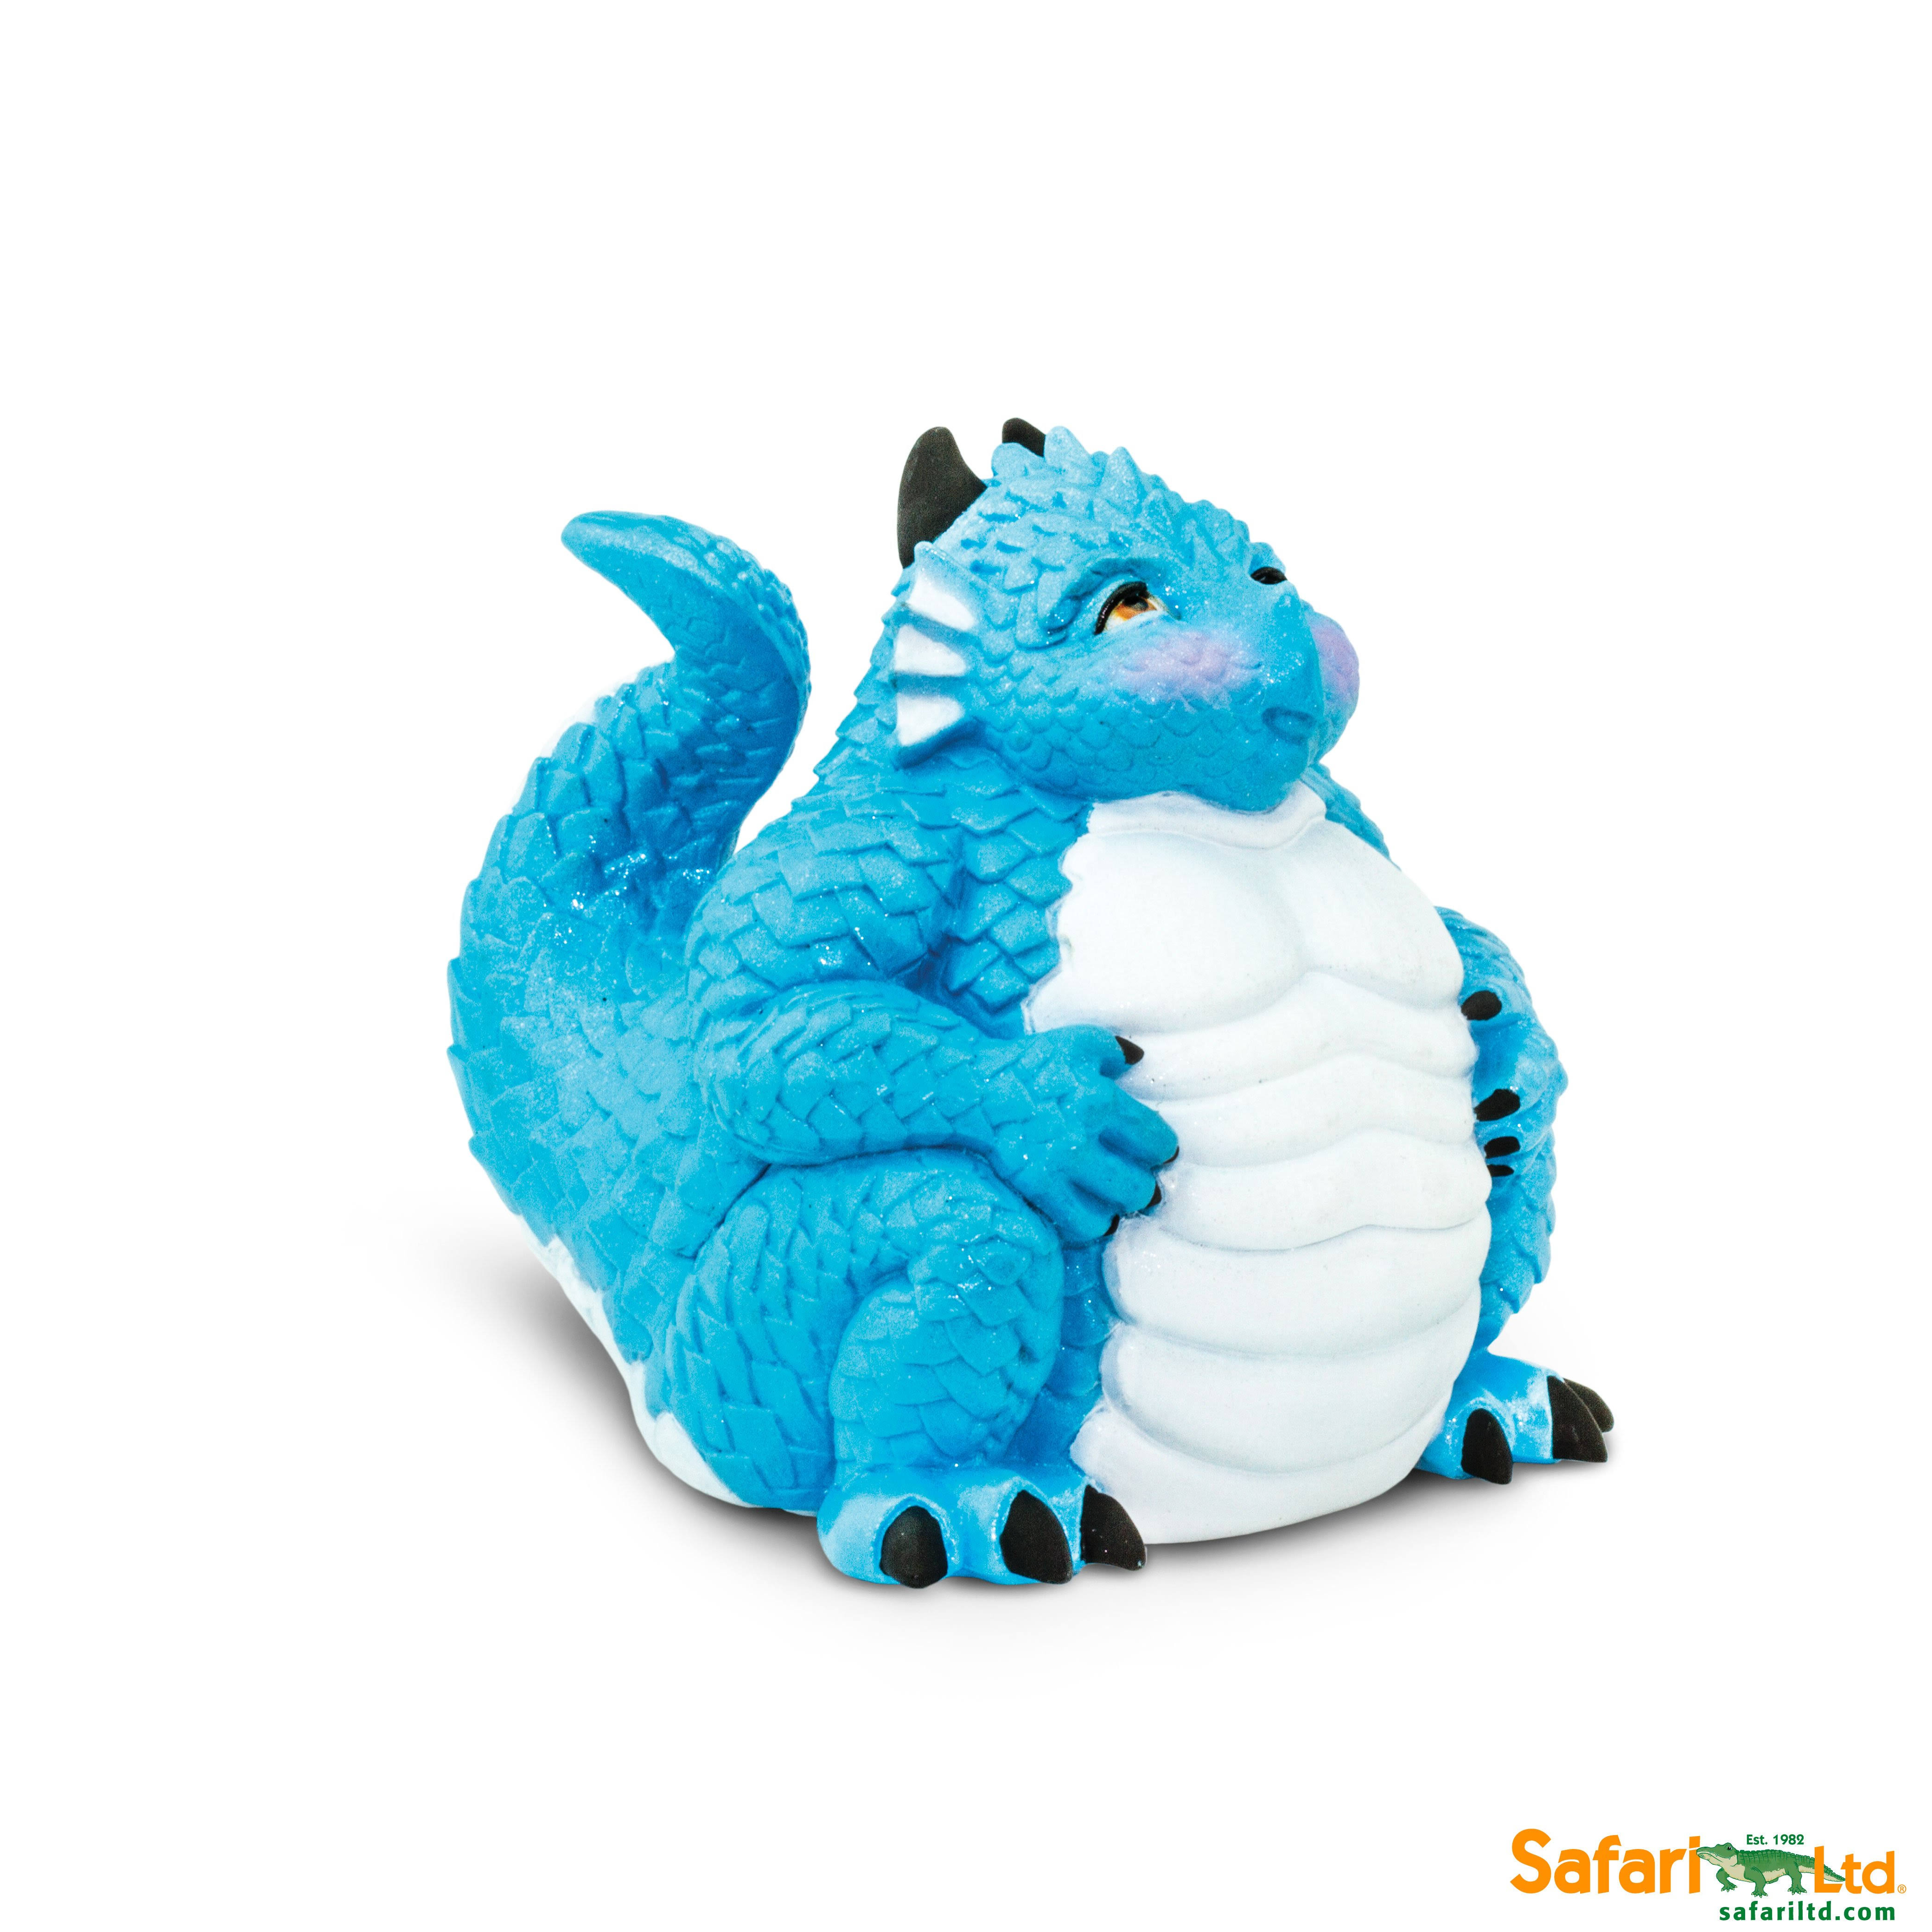 Safari Ltd Puff Dragon Figure